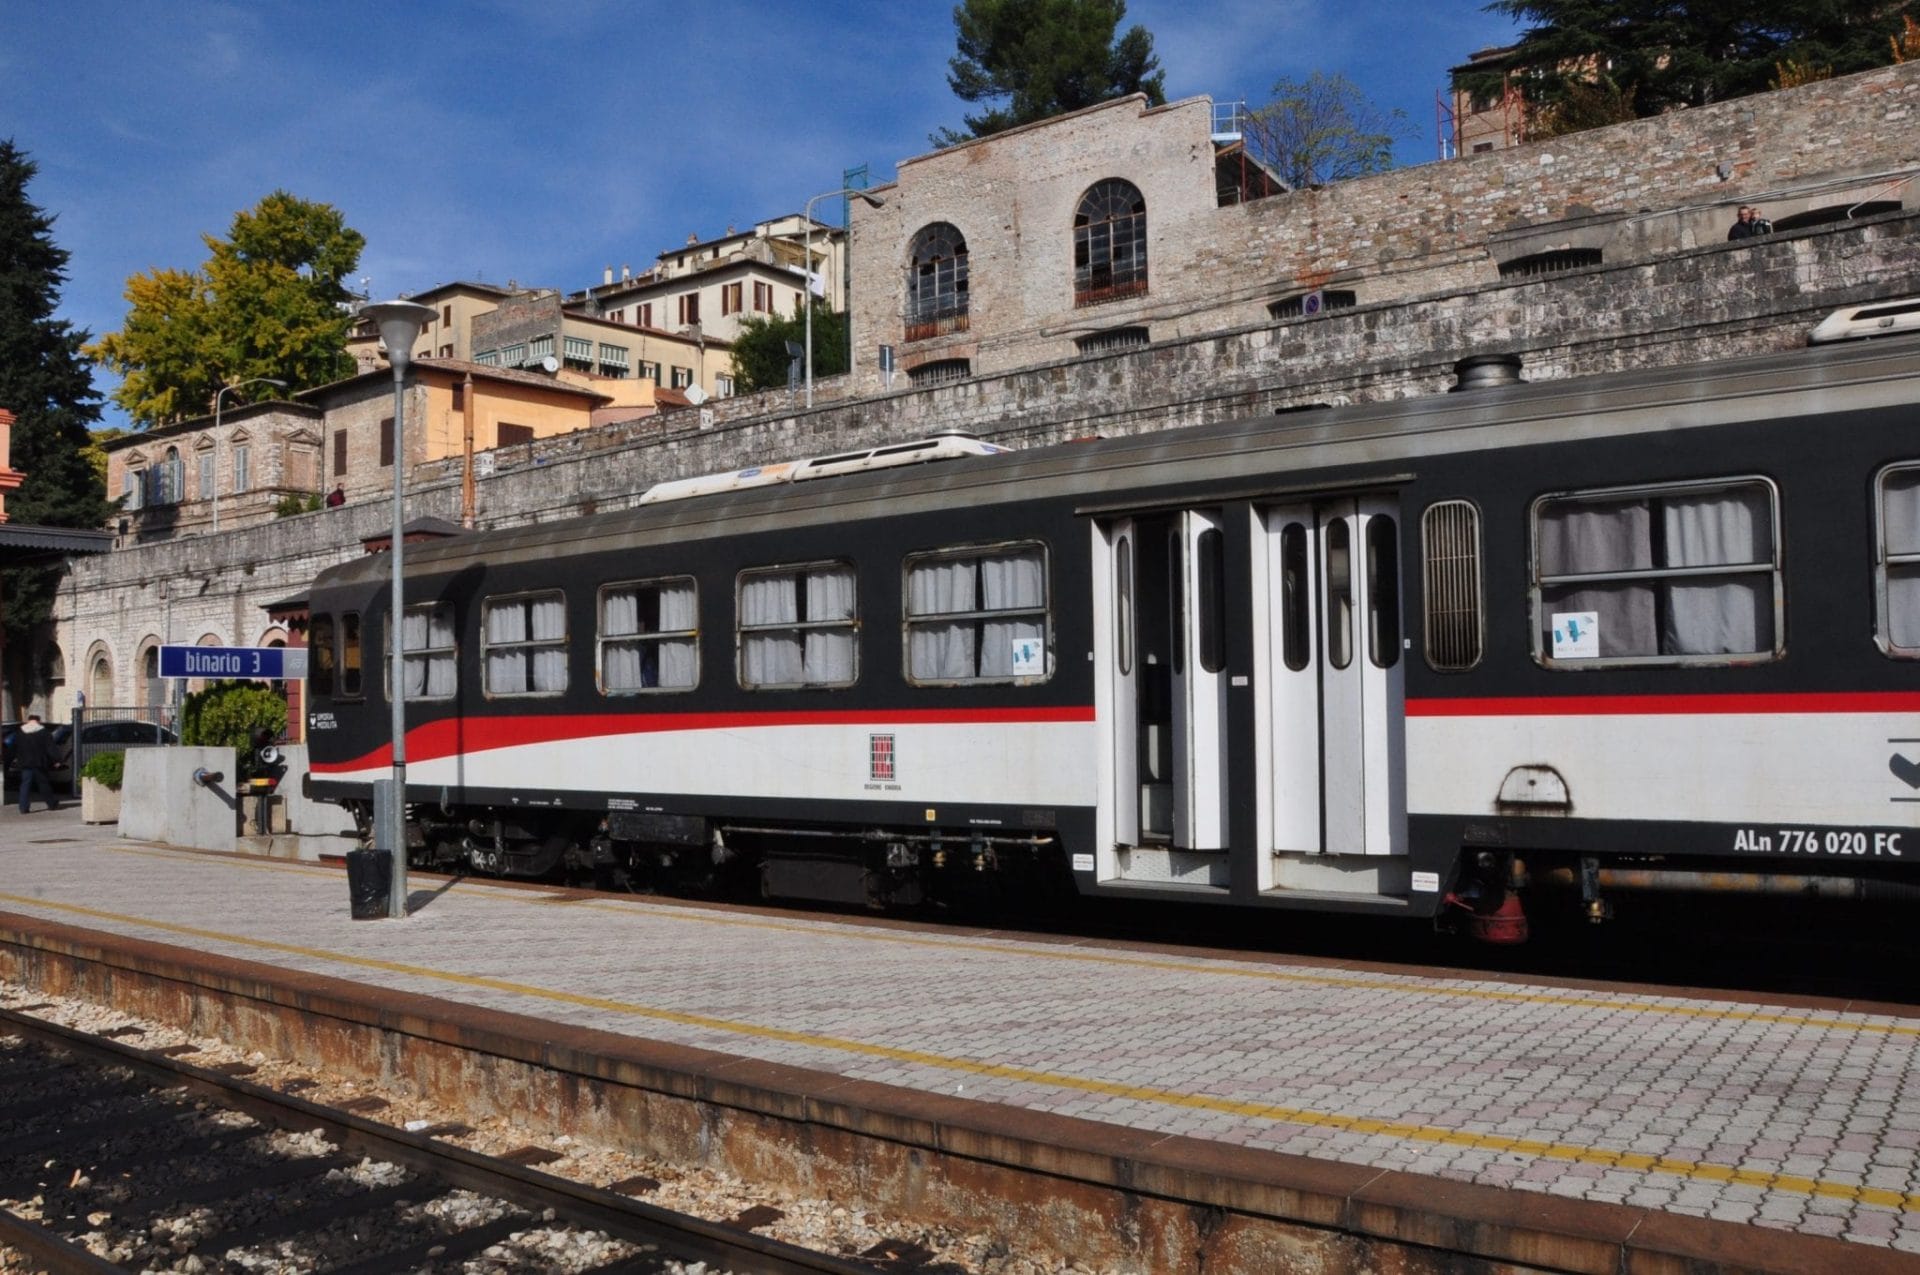 Umbrian train line 